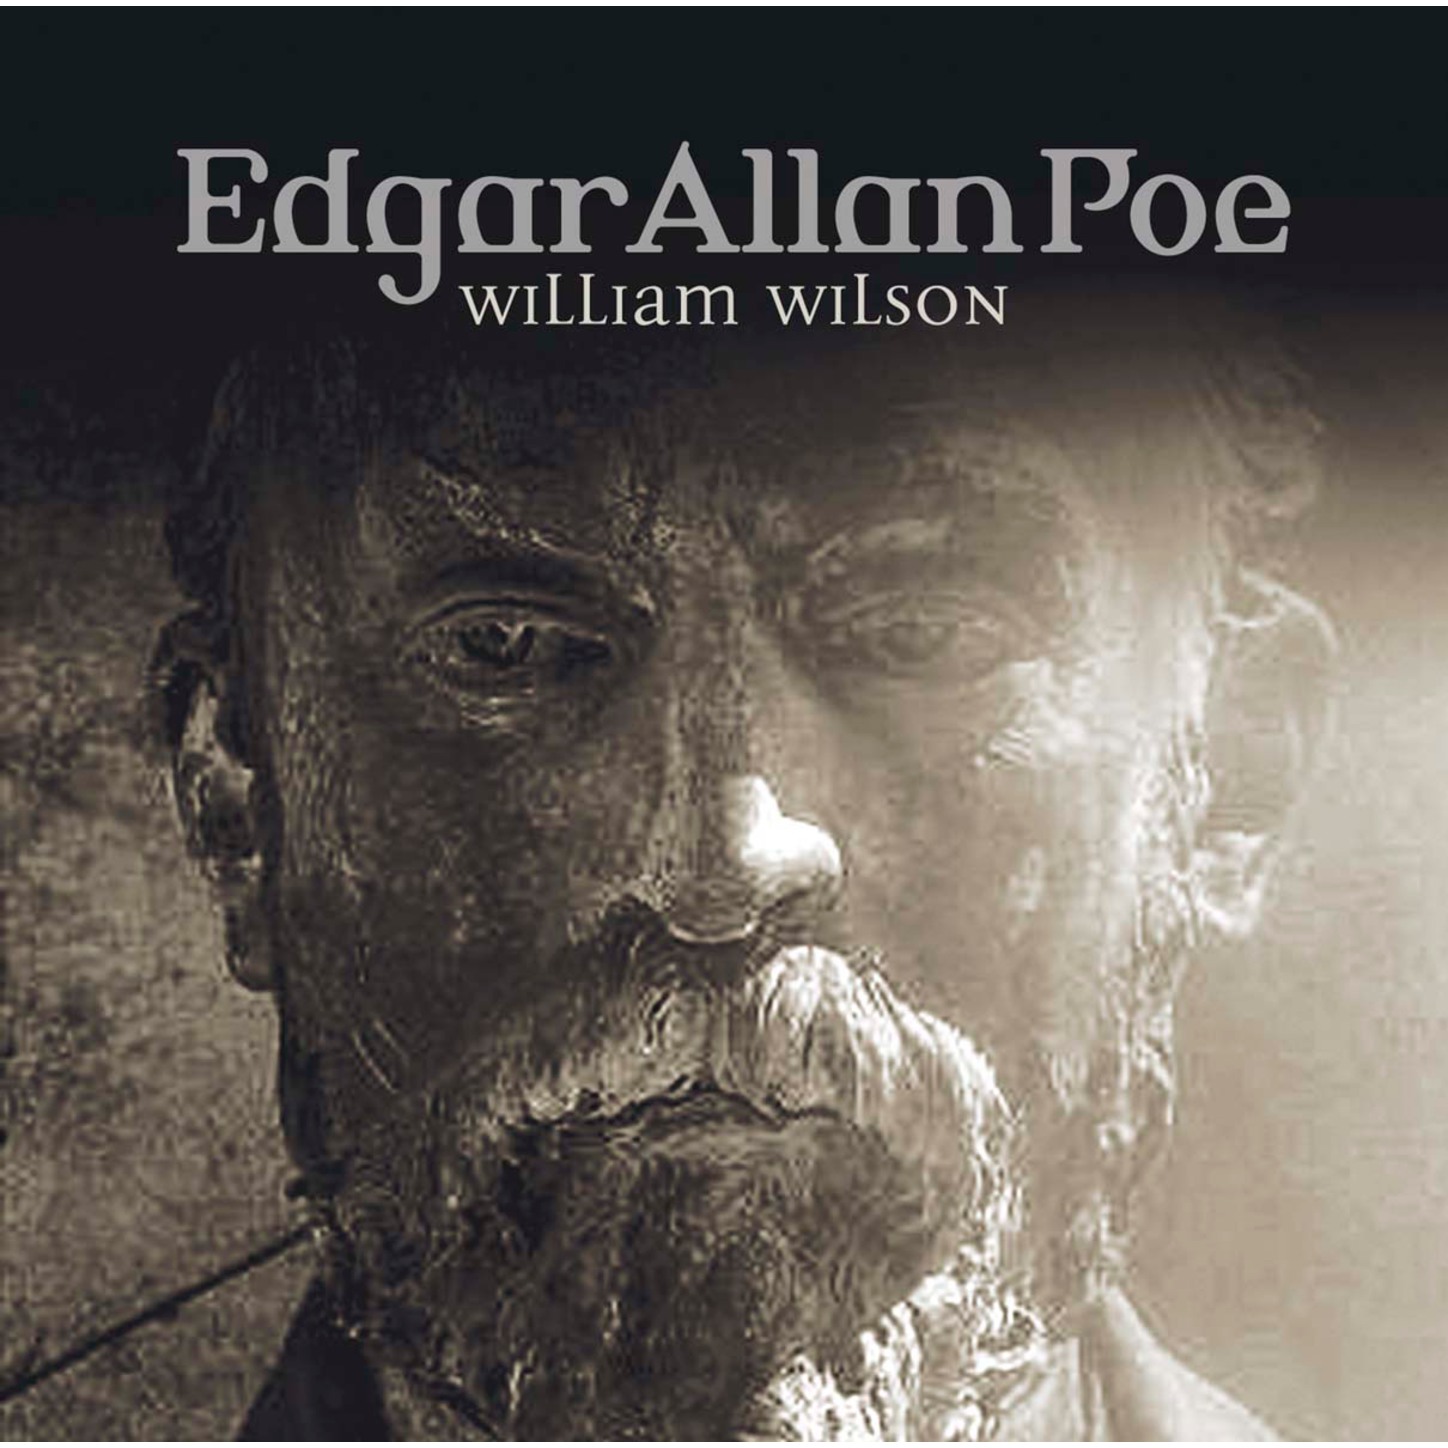 Скачать Edgar Allan Poe, Folge 32: William Wilson - Эдгар Аллан По